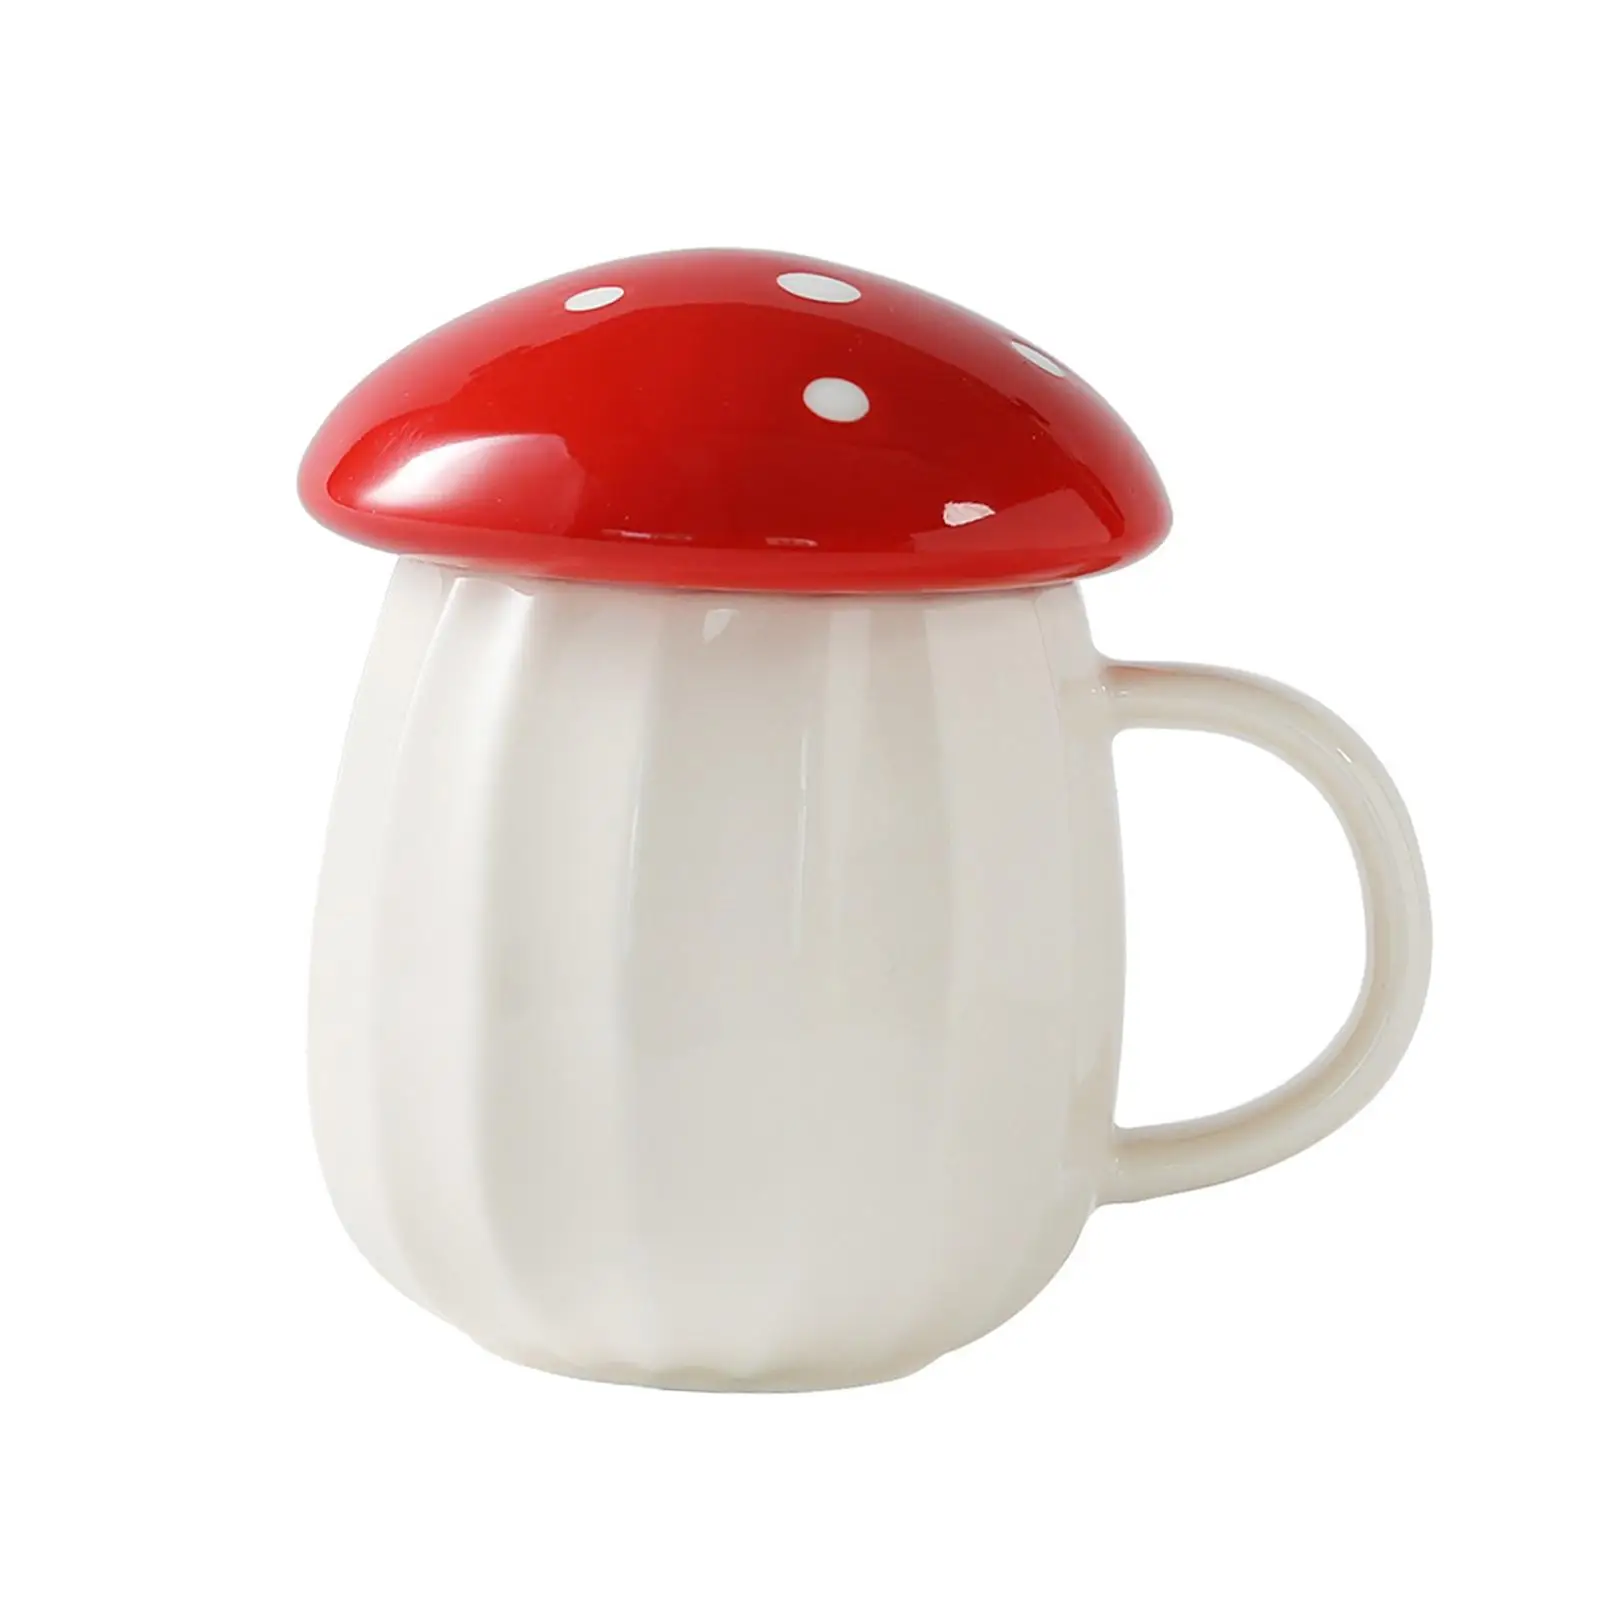 Creative Mushroom Cup Mug Water Bottle Handmade Gifts Durable with Lid Drinkware for Tea Beverage Home Kitchen Breakfast